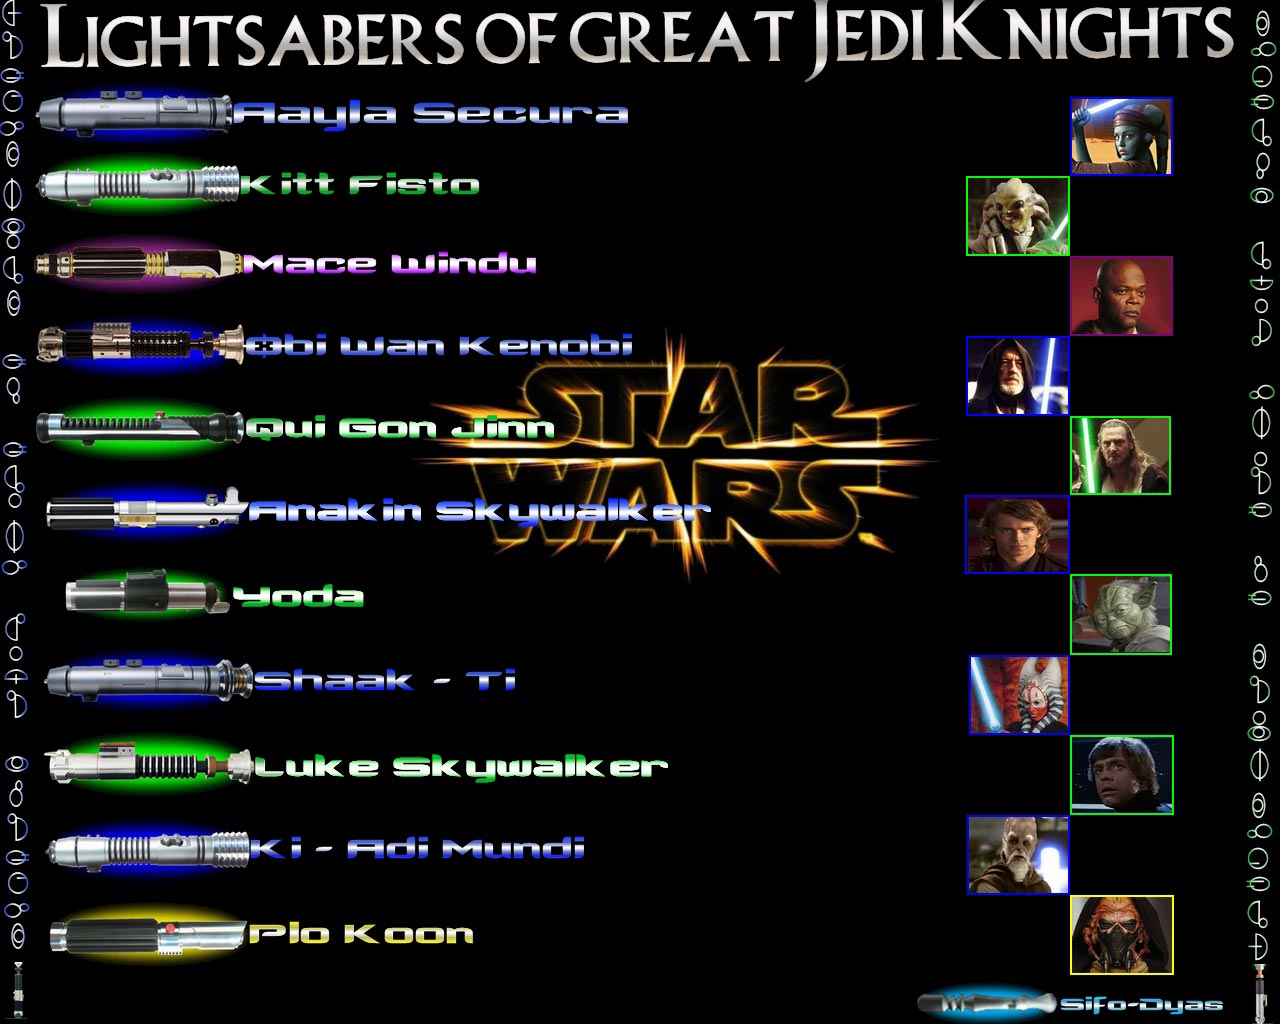 Lightsabers of great Jedi Knights